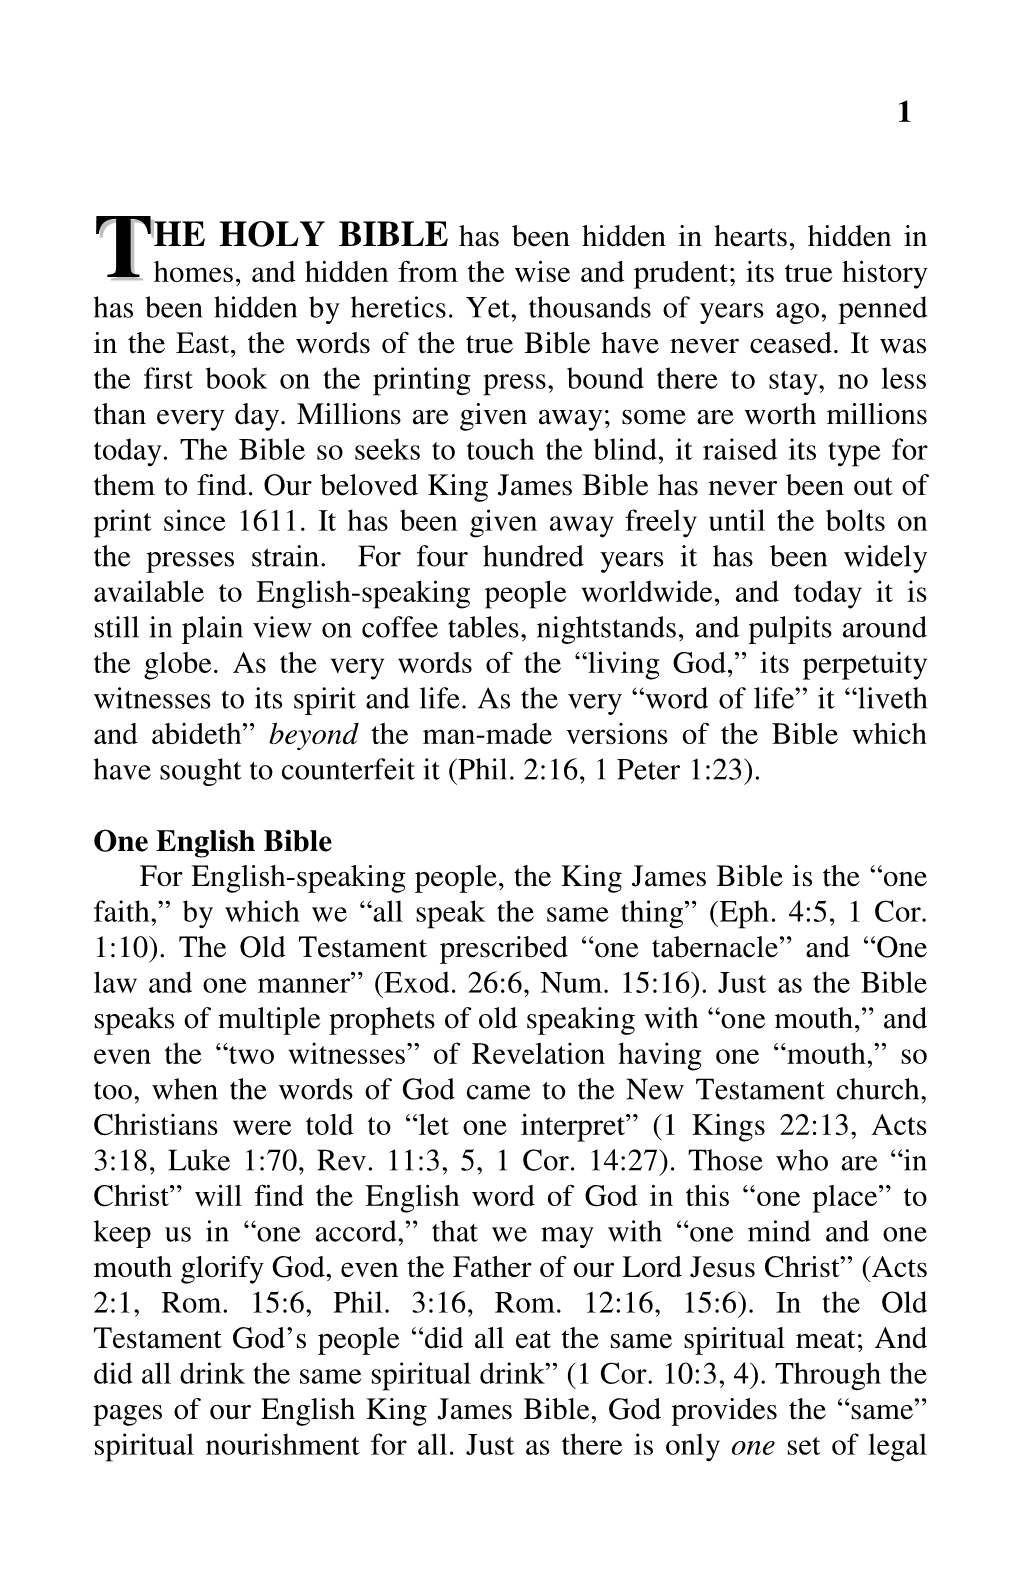 THE HIDDEN HISTORY of the ENGLISH SCRIPTURES 3 Were Originally Written